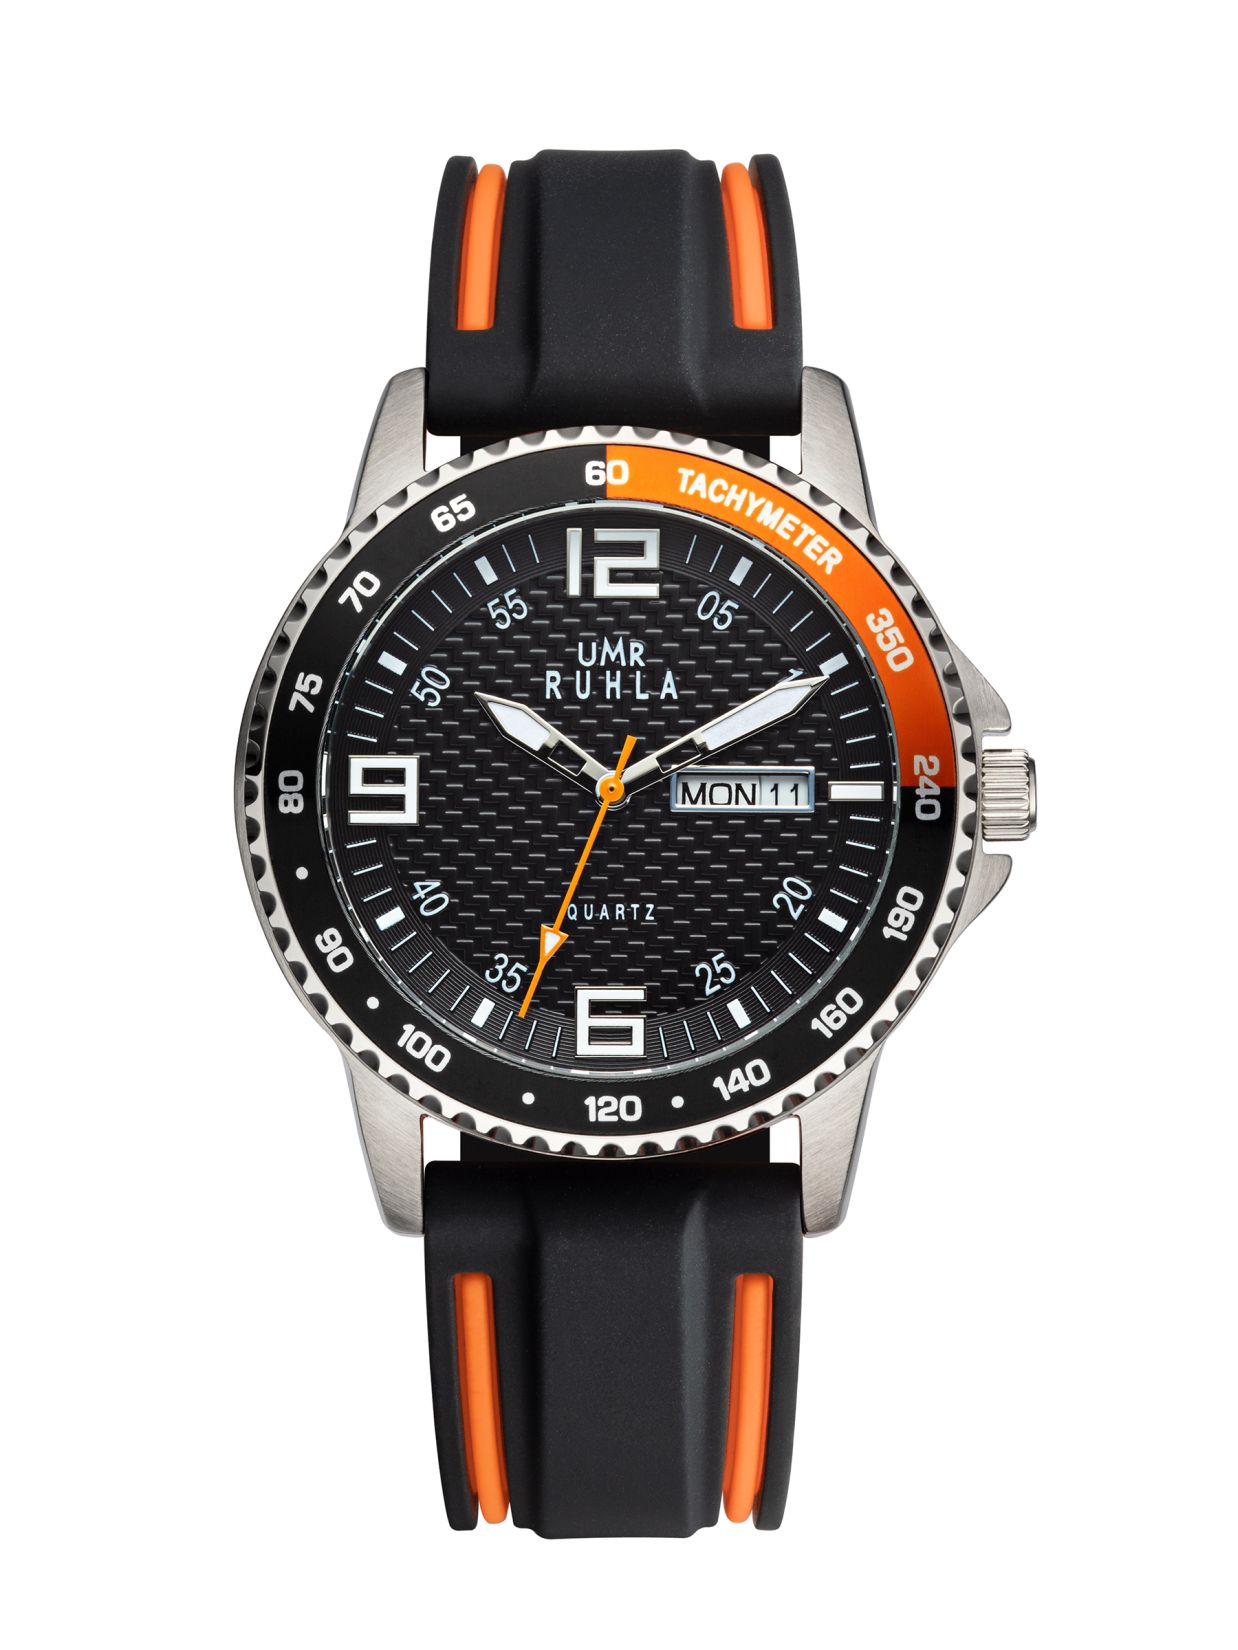 Uhren Manufaktur Ruhla - Armbanduhr Sport - schwarz/orange